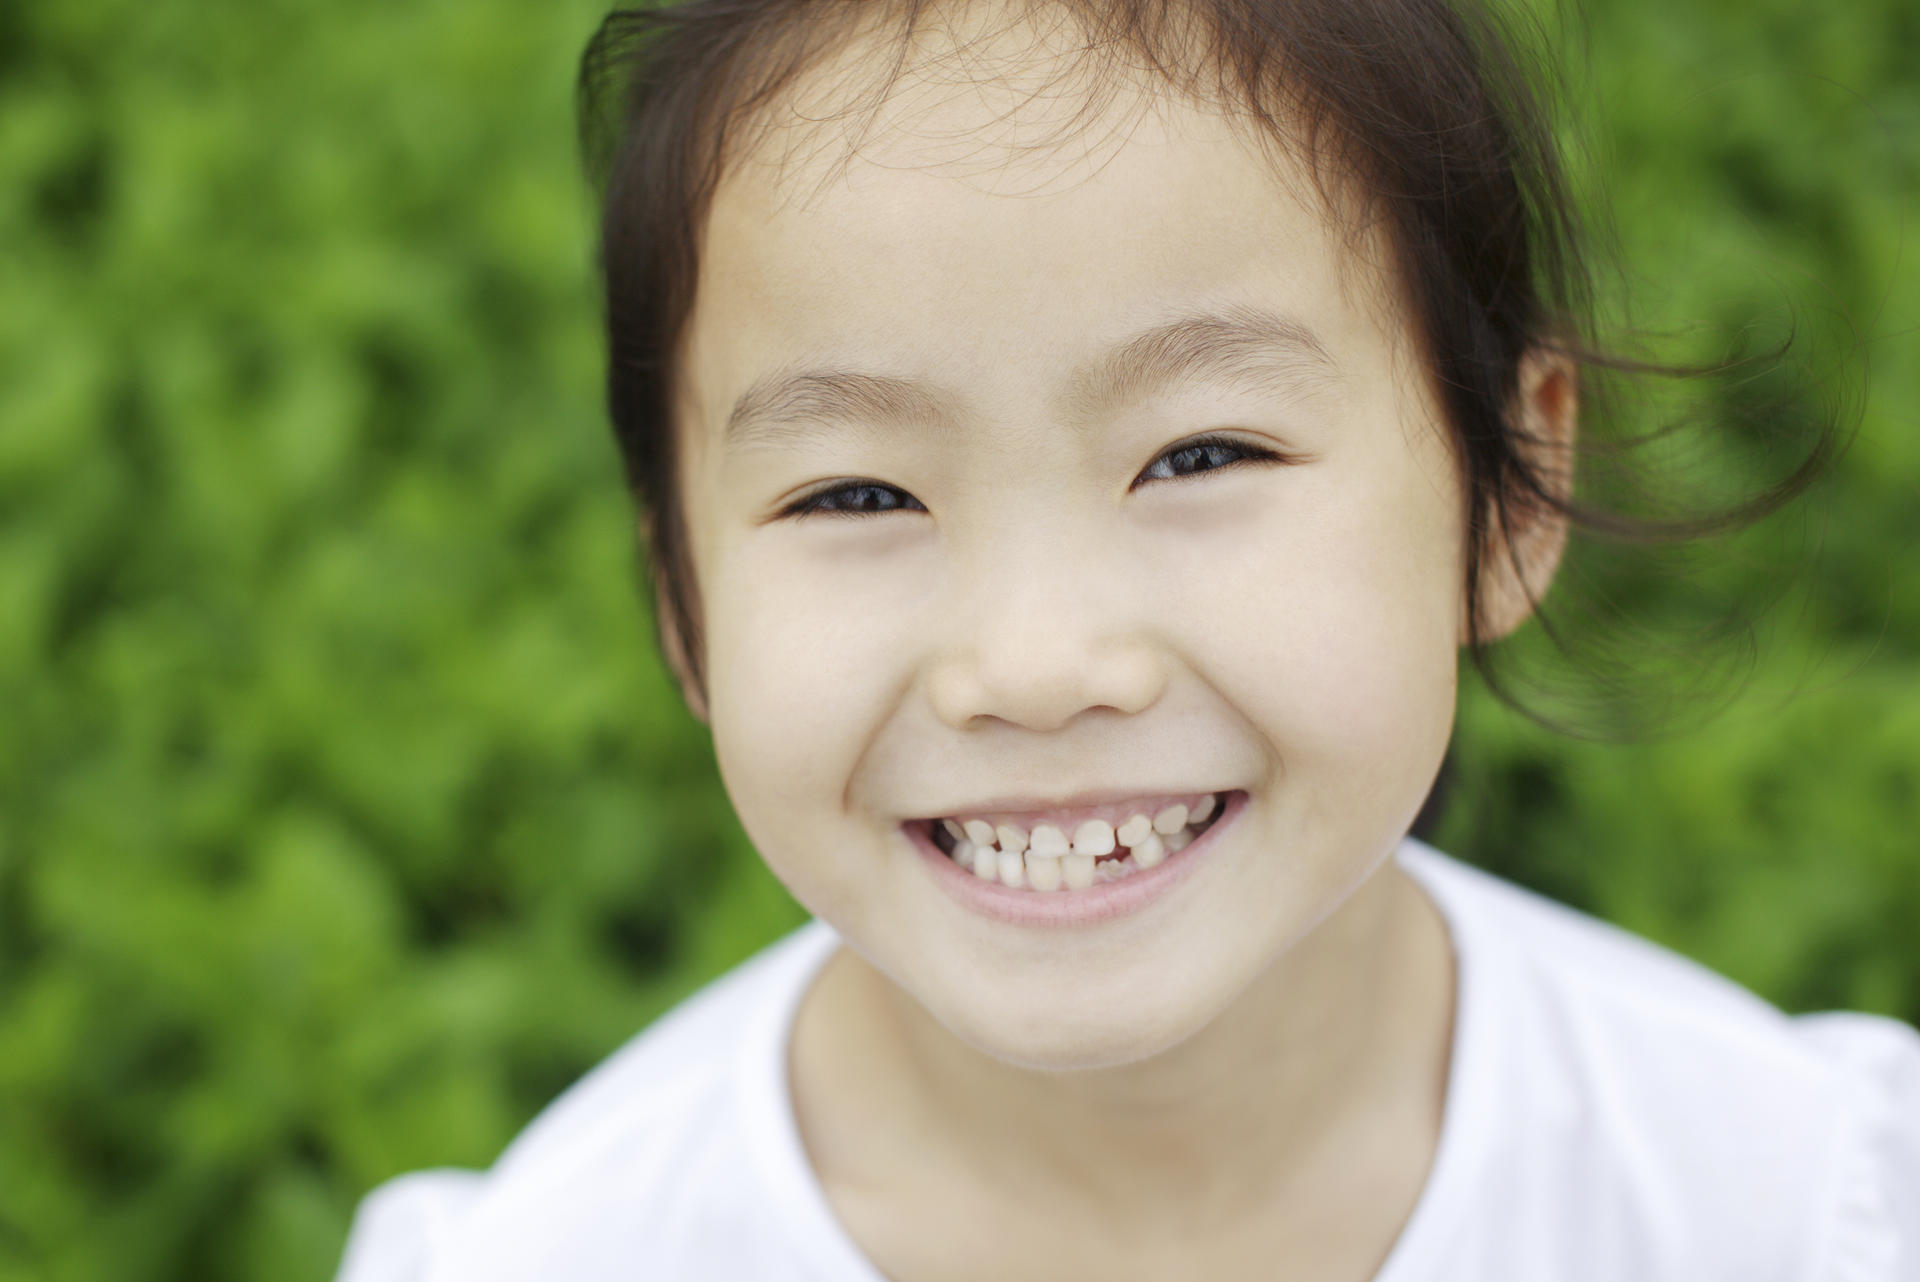 Even sugar-free soft drinks can erode children's teeth. Photo: Corbis